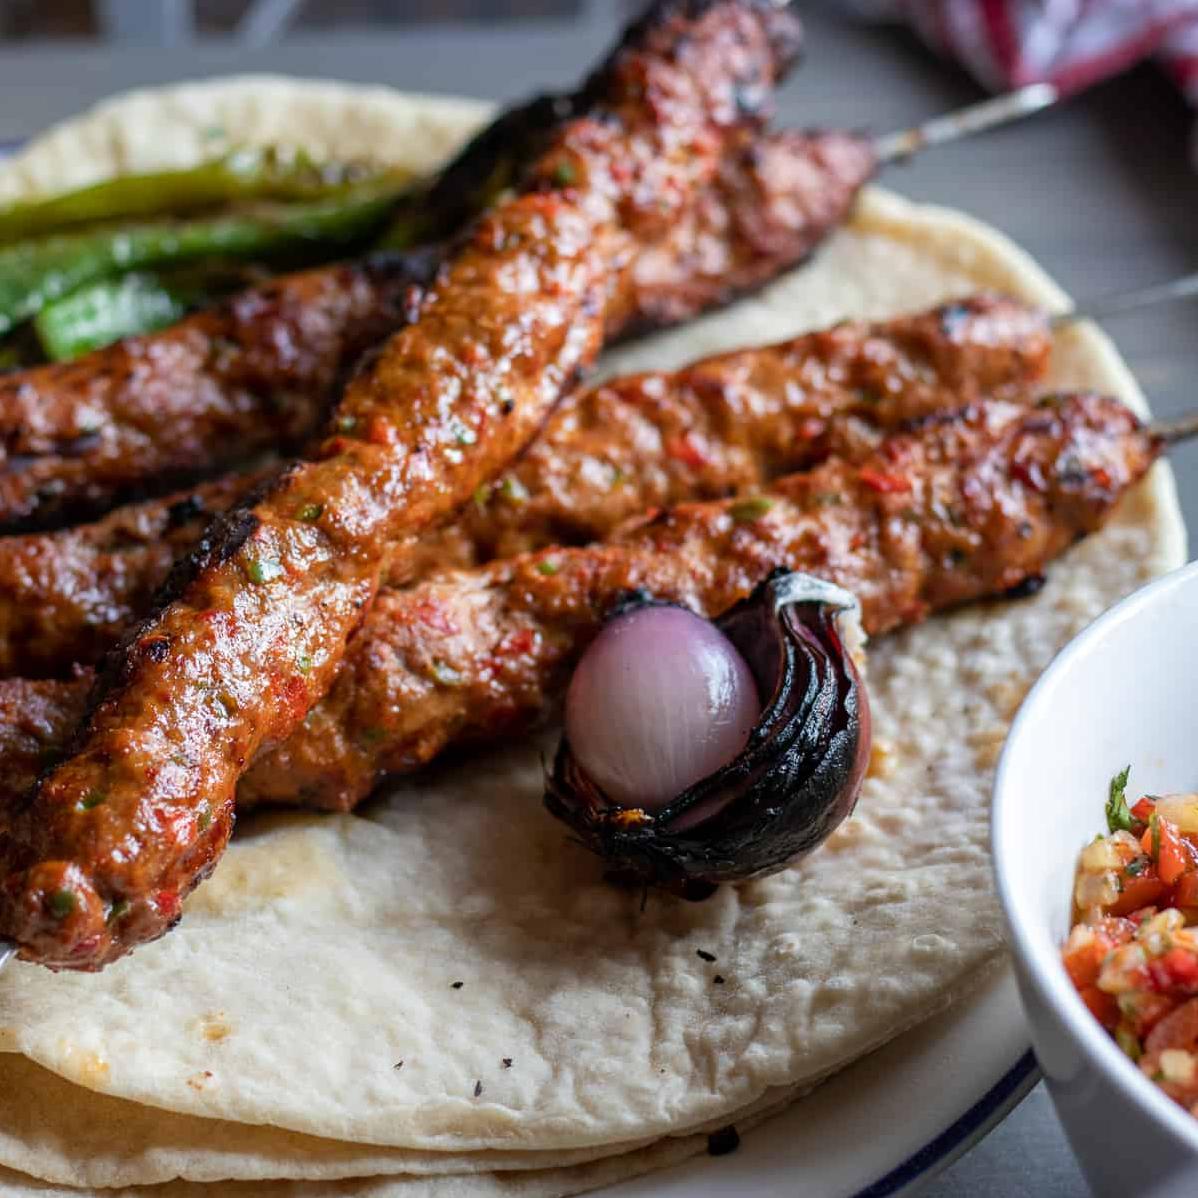  This Turkish cuisine has hit a home run!